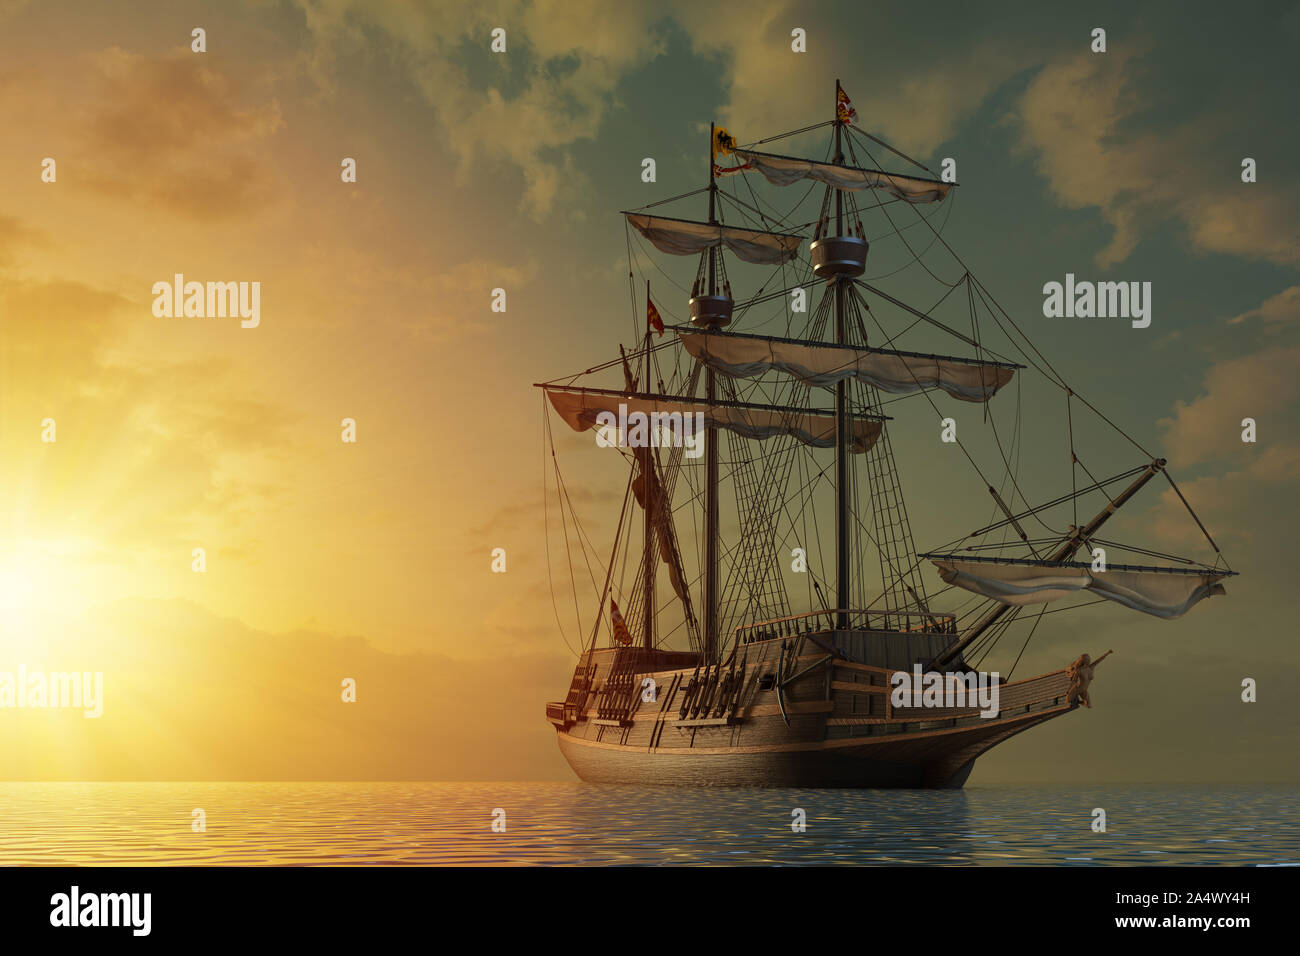 Spanish galleon ship on the open seas by shining sunset. 3D Illustration. Stock Photo